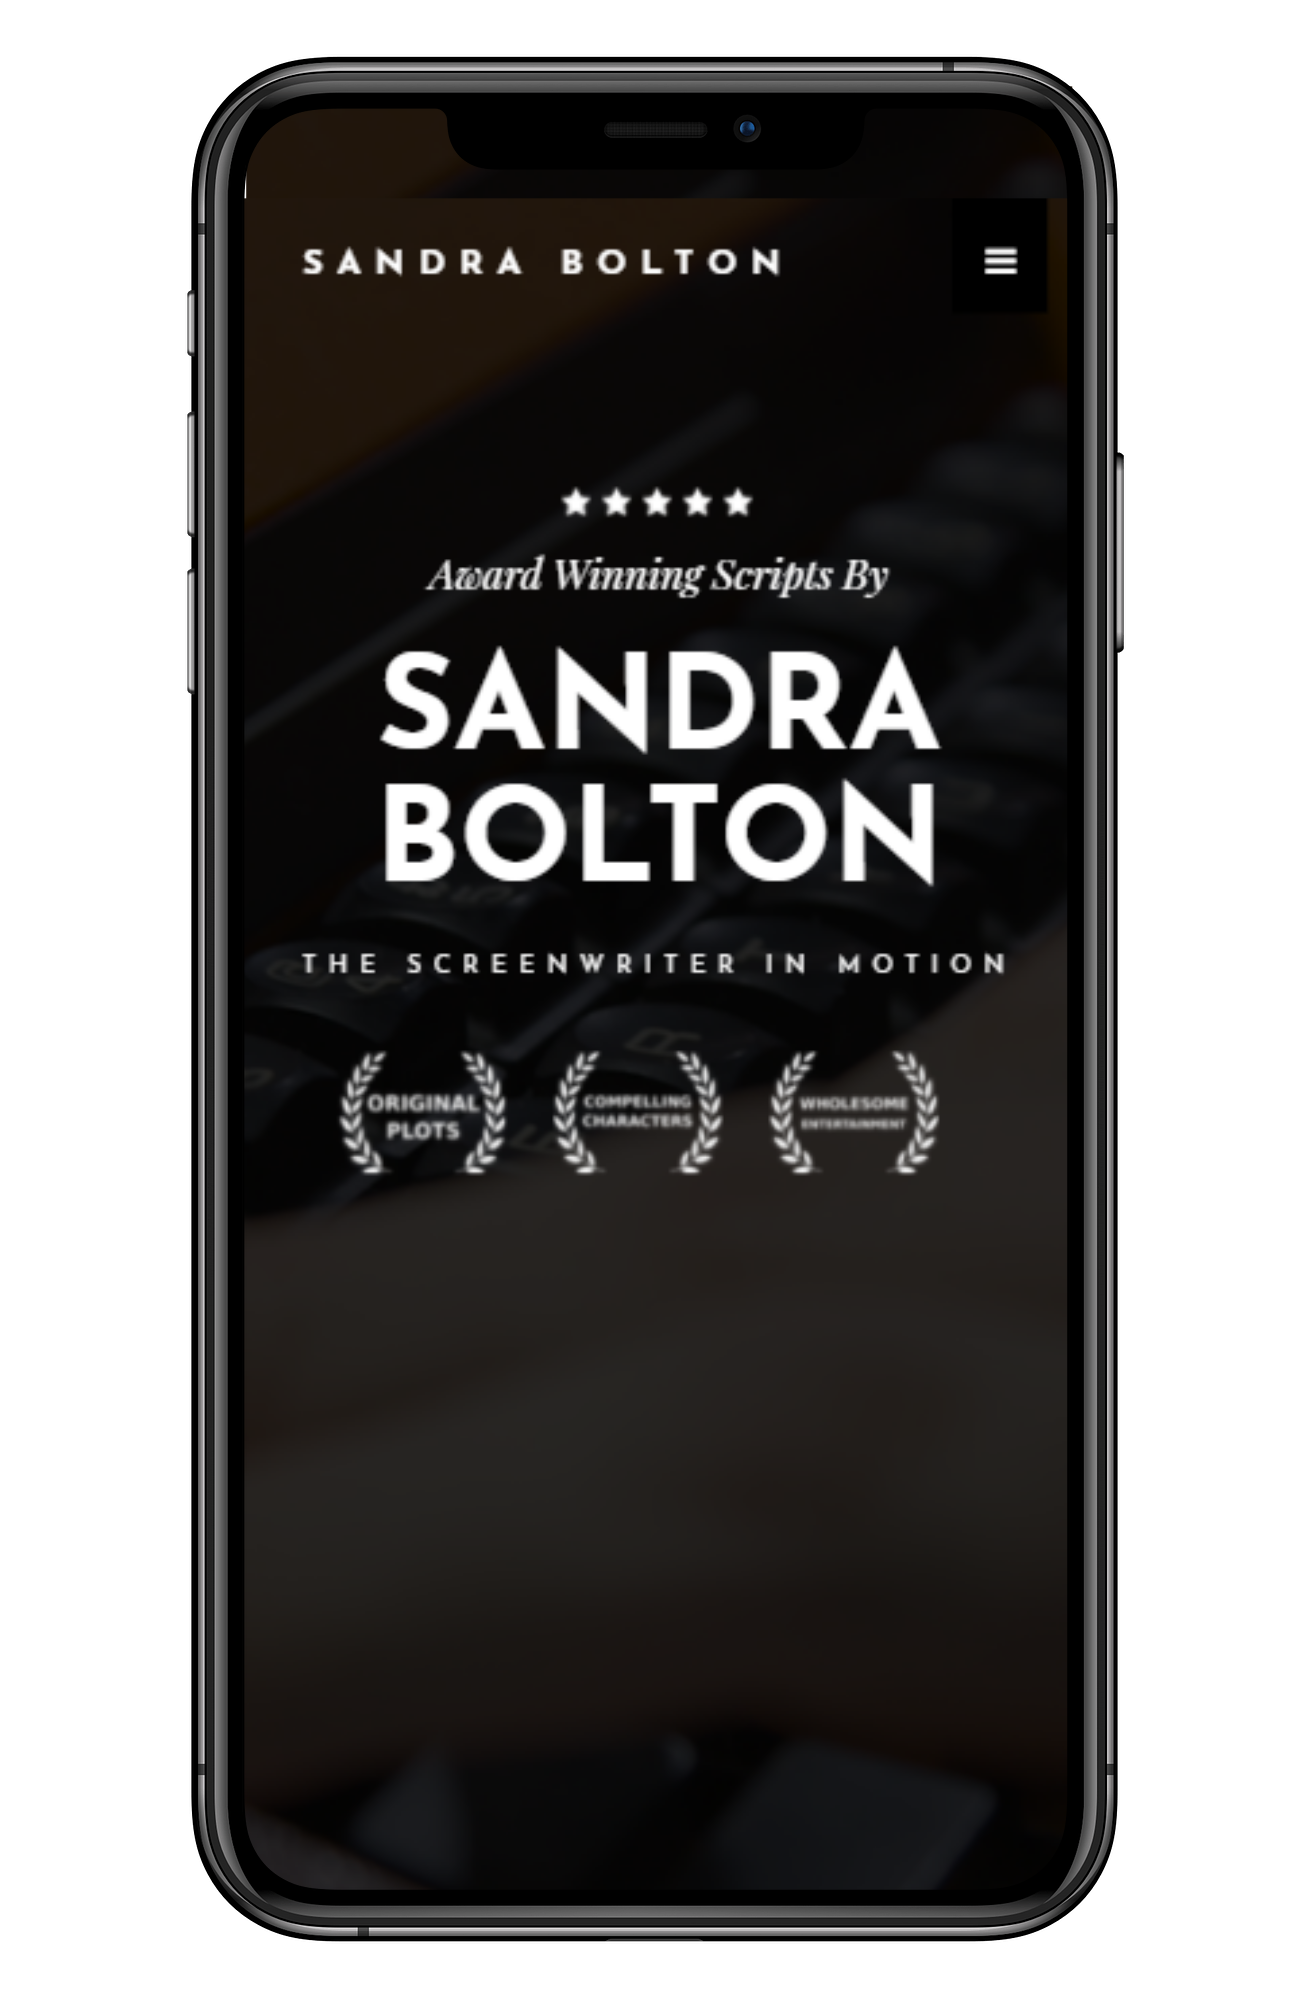 Screenwriter Sandra Bolton's mobile website